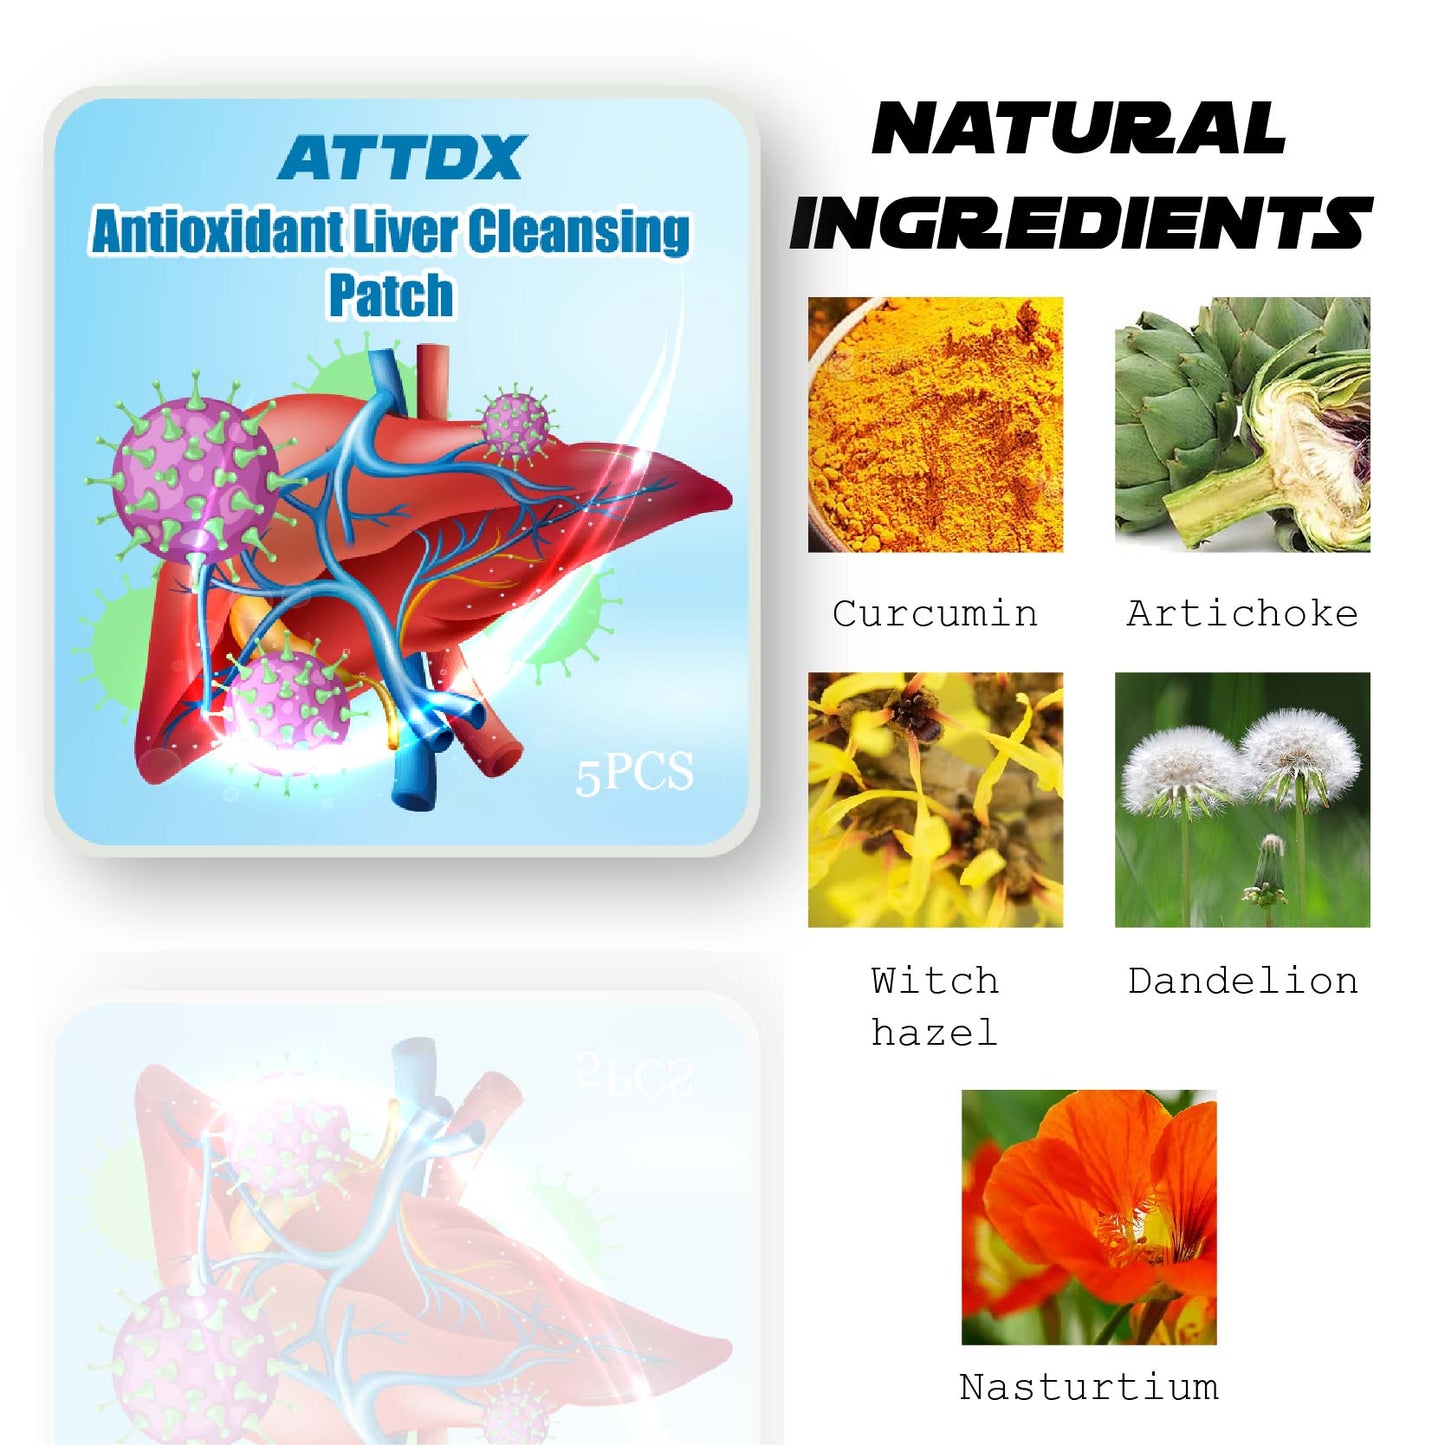 ATTDX Antioxidant LiverCleansing Patch